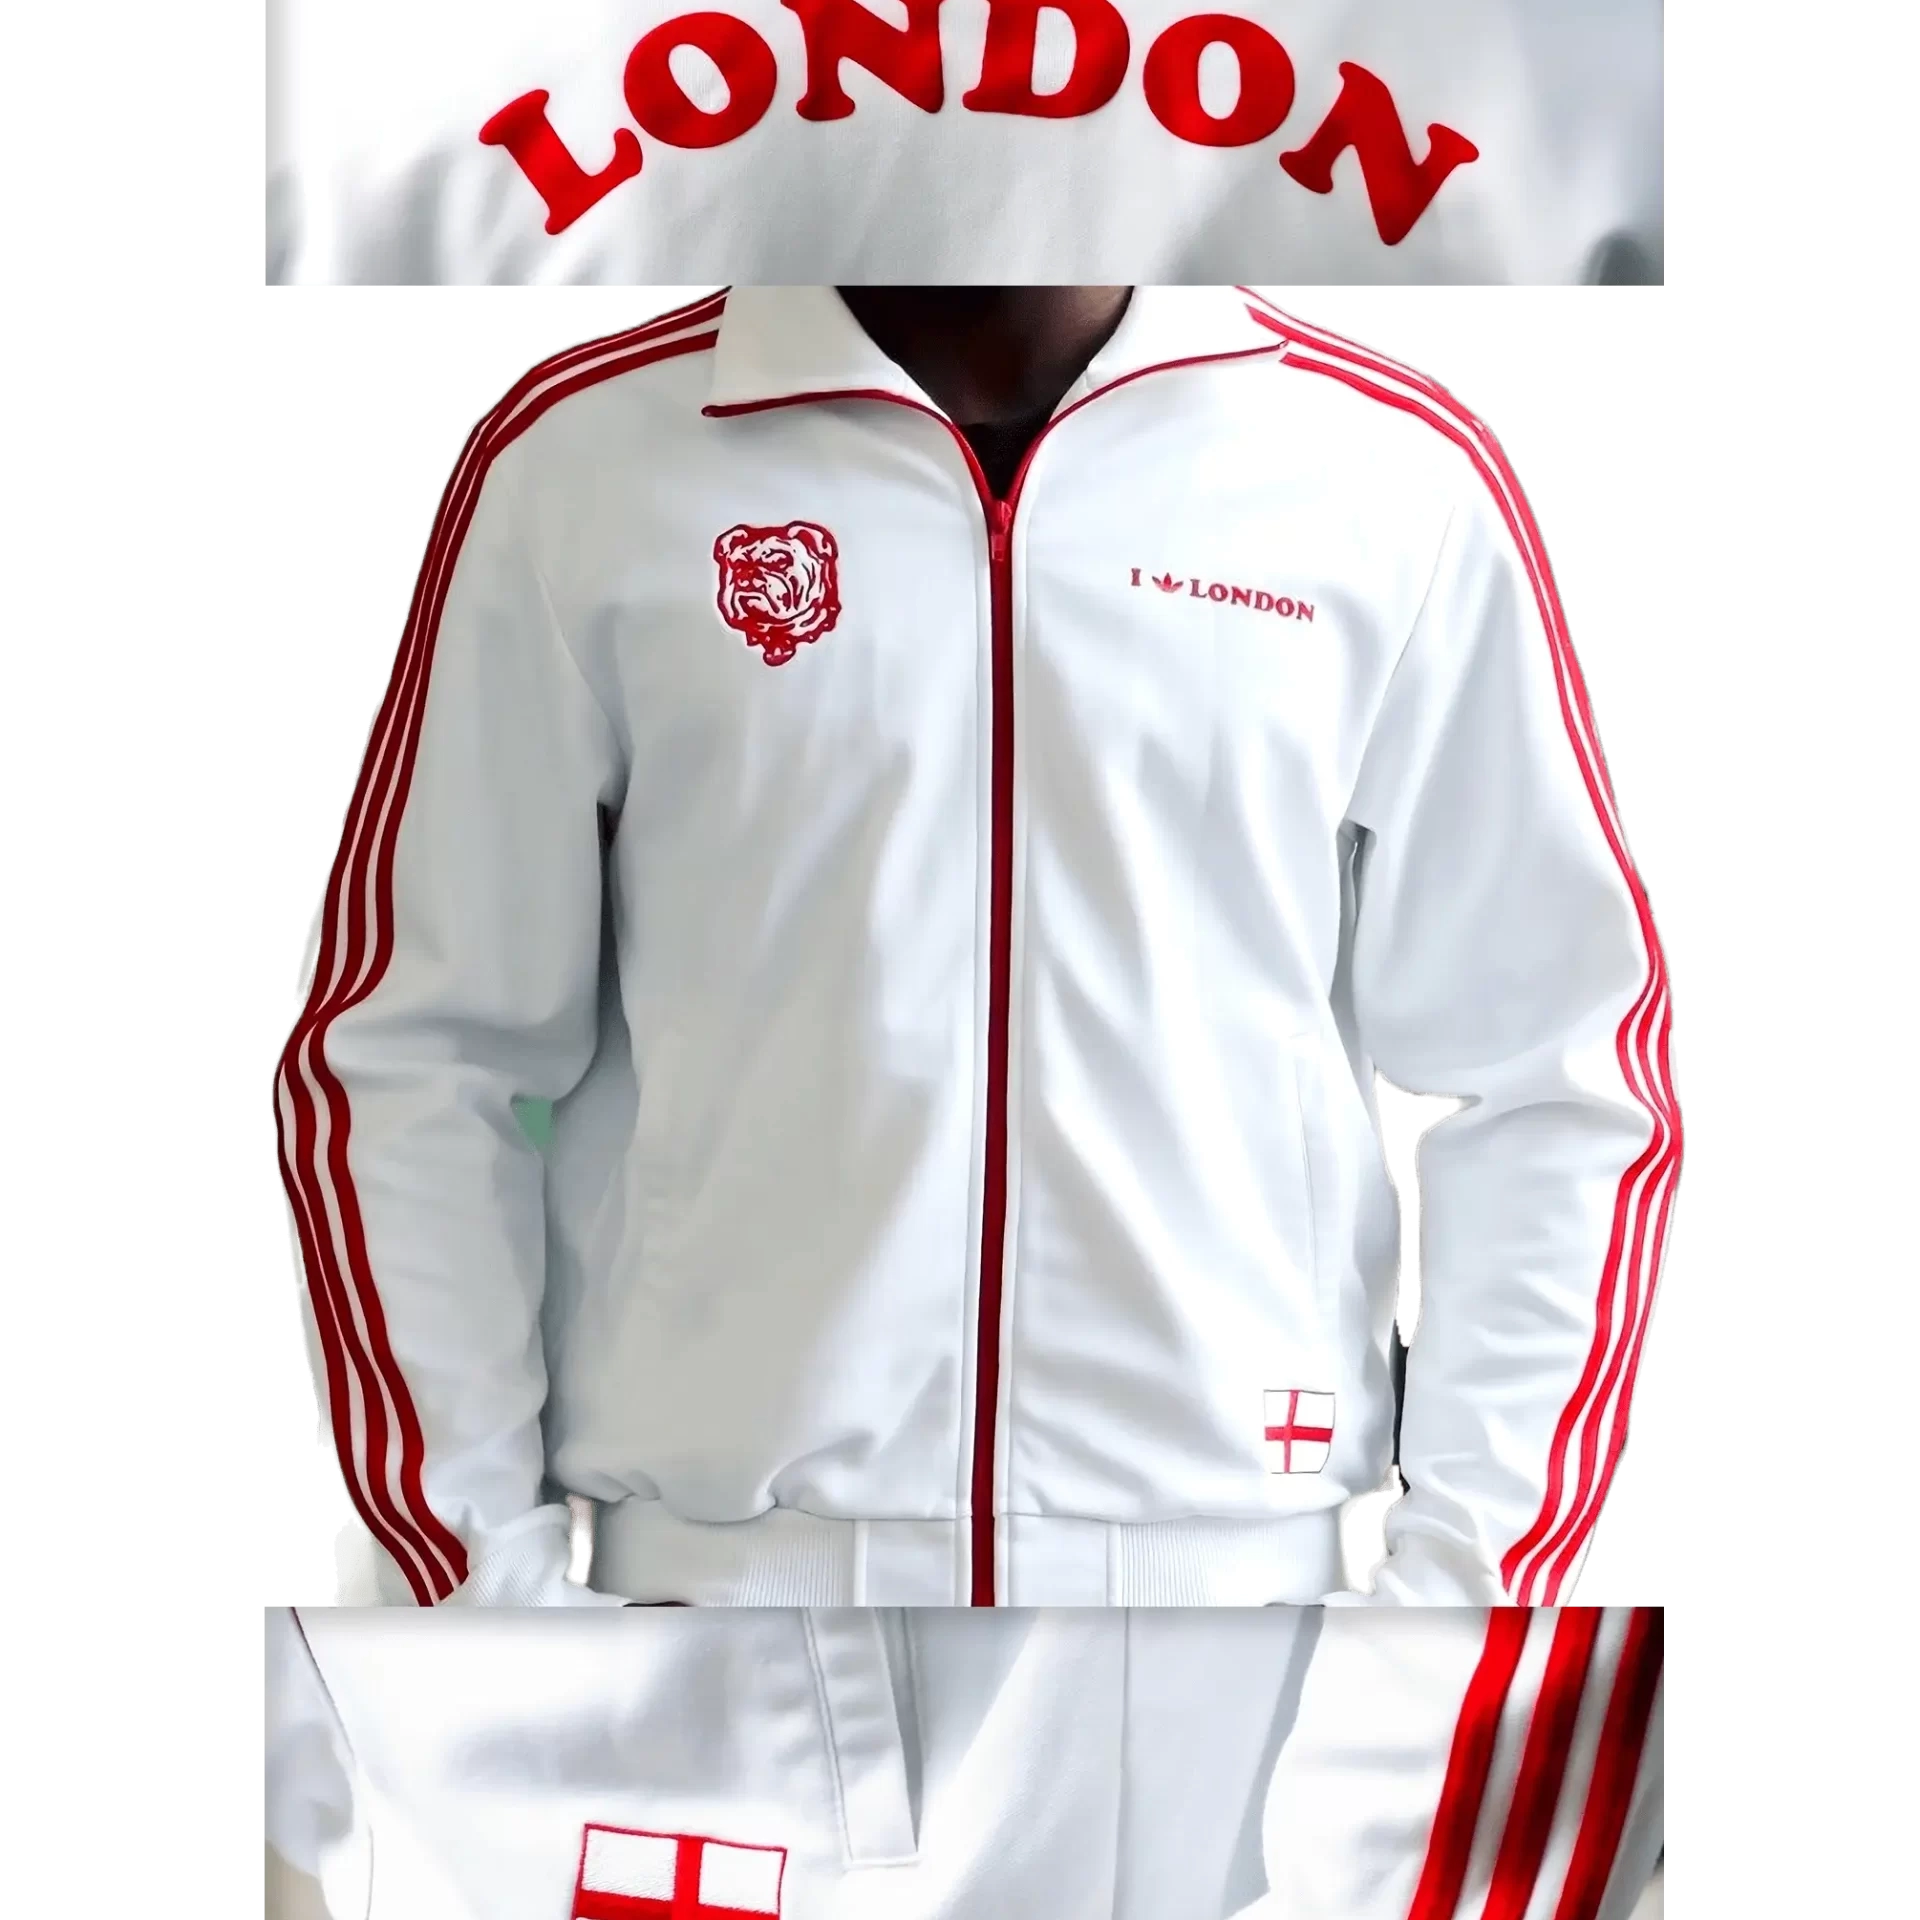 Men's 2006 London TT-Two by Adidas Originals: Effortless (EnLawded.com file #lmchk58415ip2y123304kg9st)